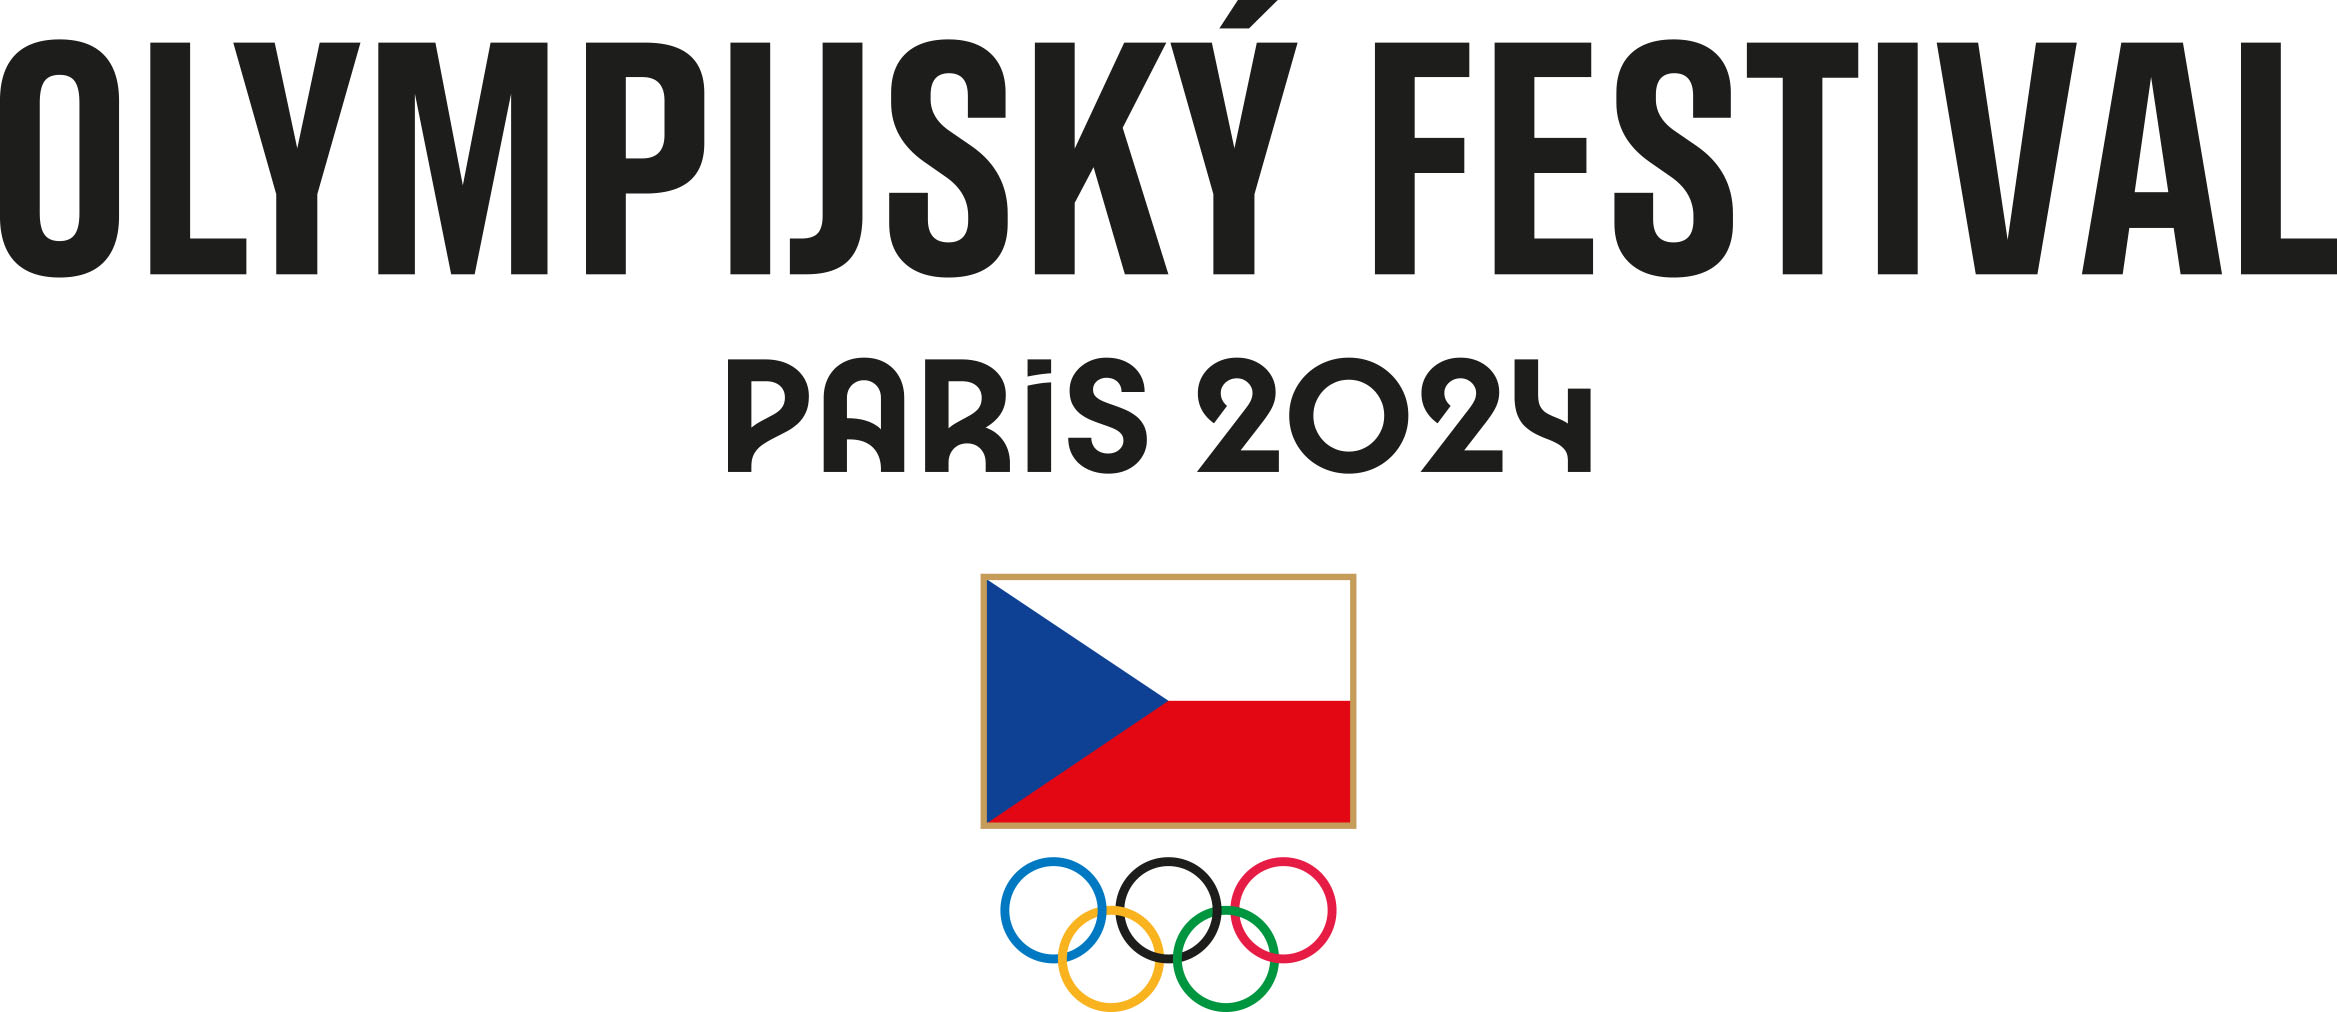 Olympijský festival Paris 2024 u Jezera Most